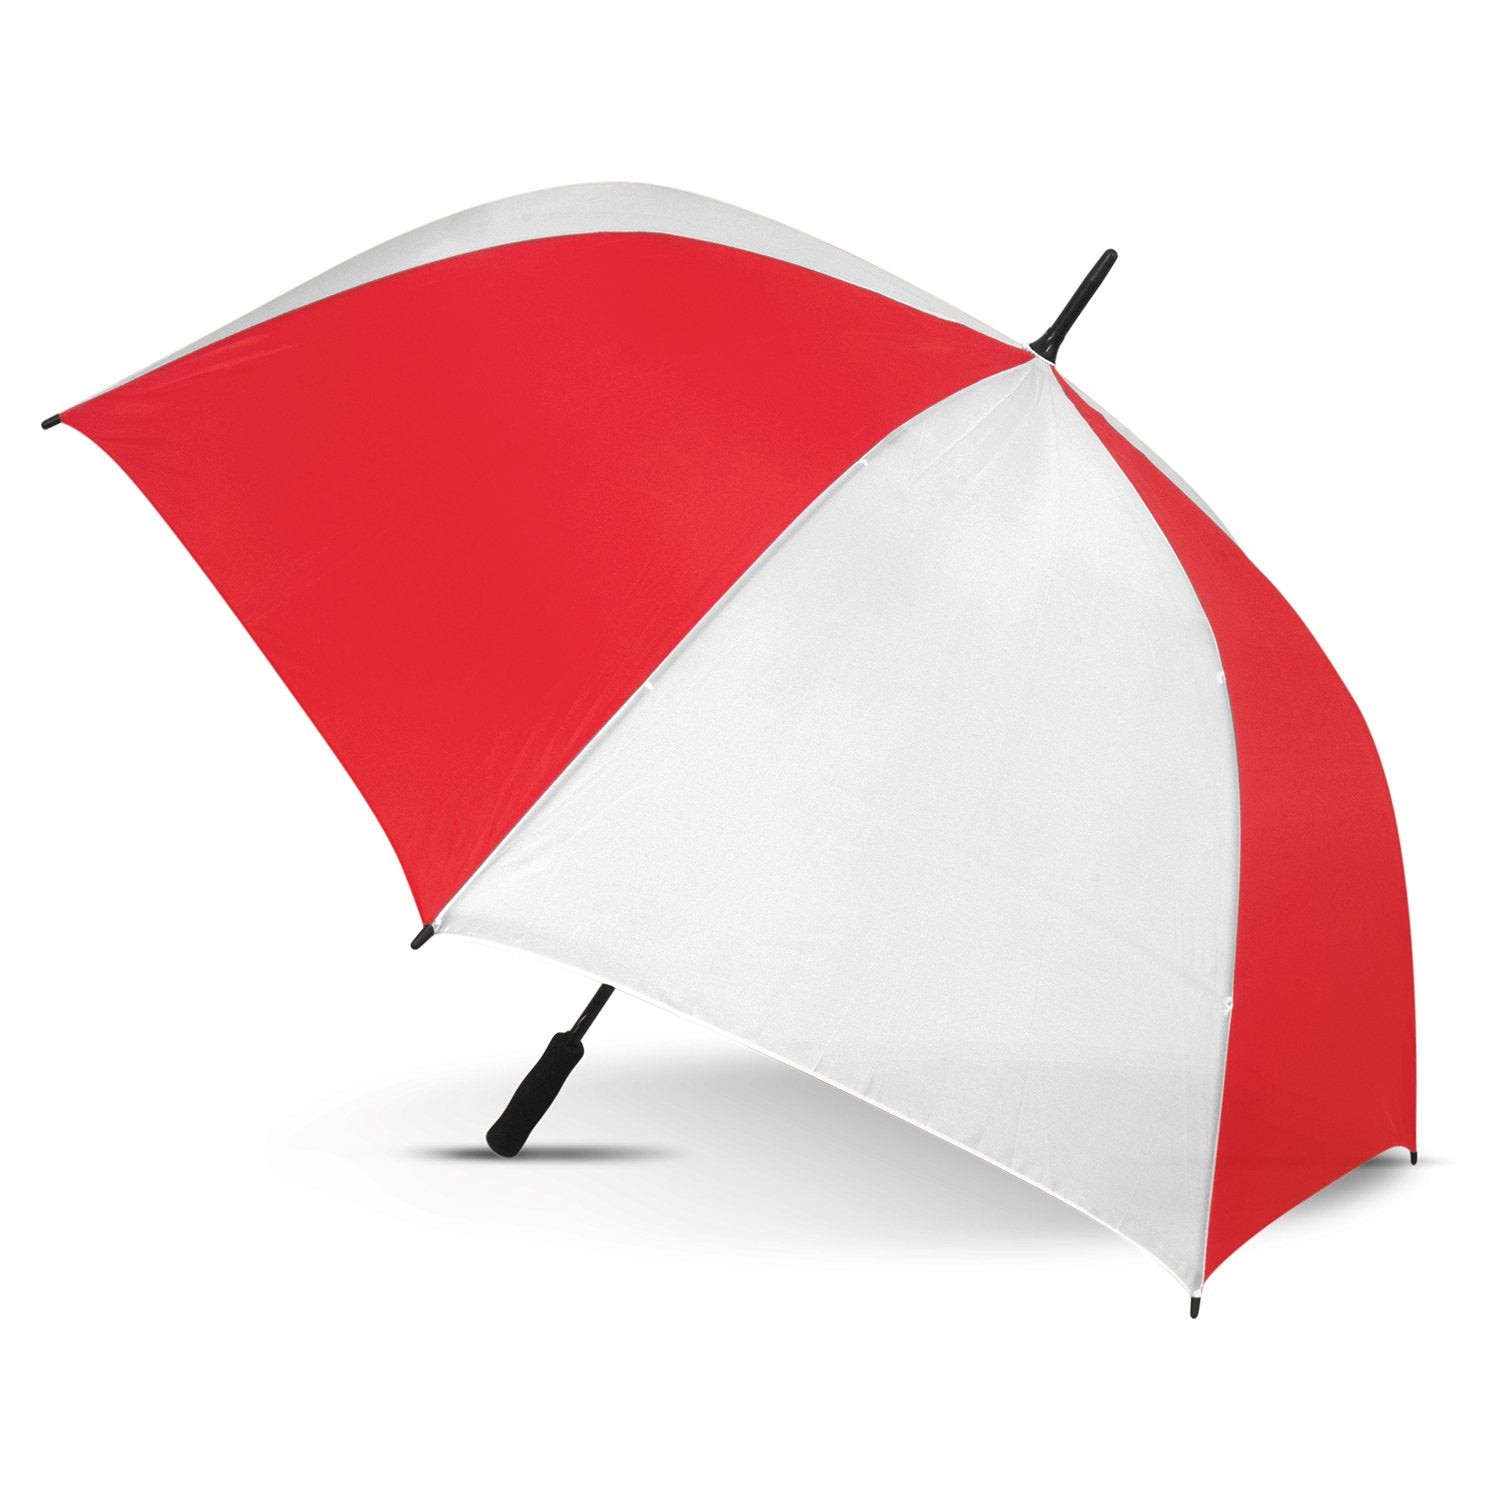 STORM-PROOF®️-premium-sports-umbrella-auto-open-white-and-red-umbrella